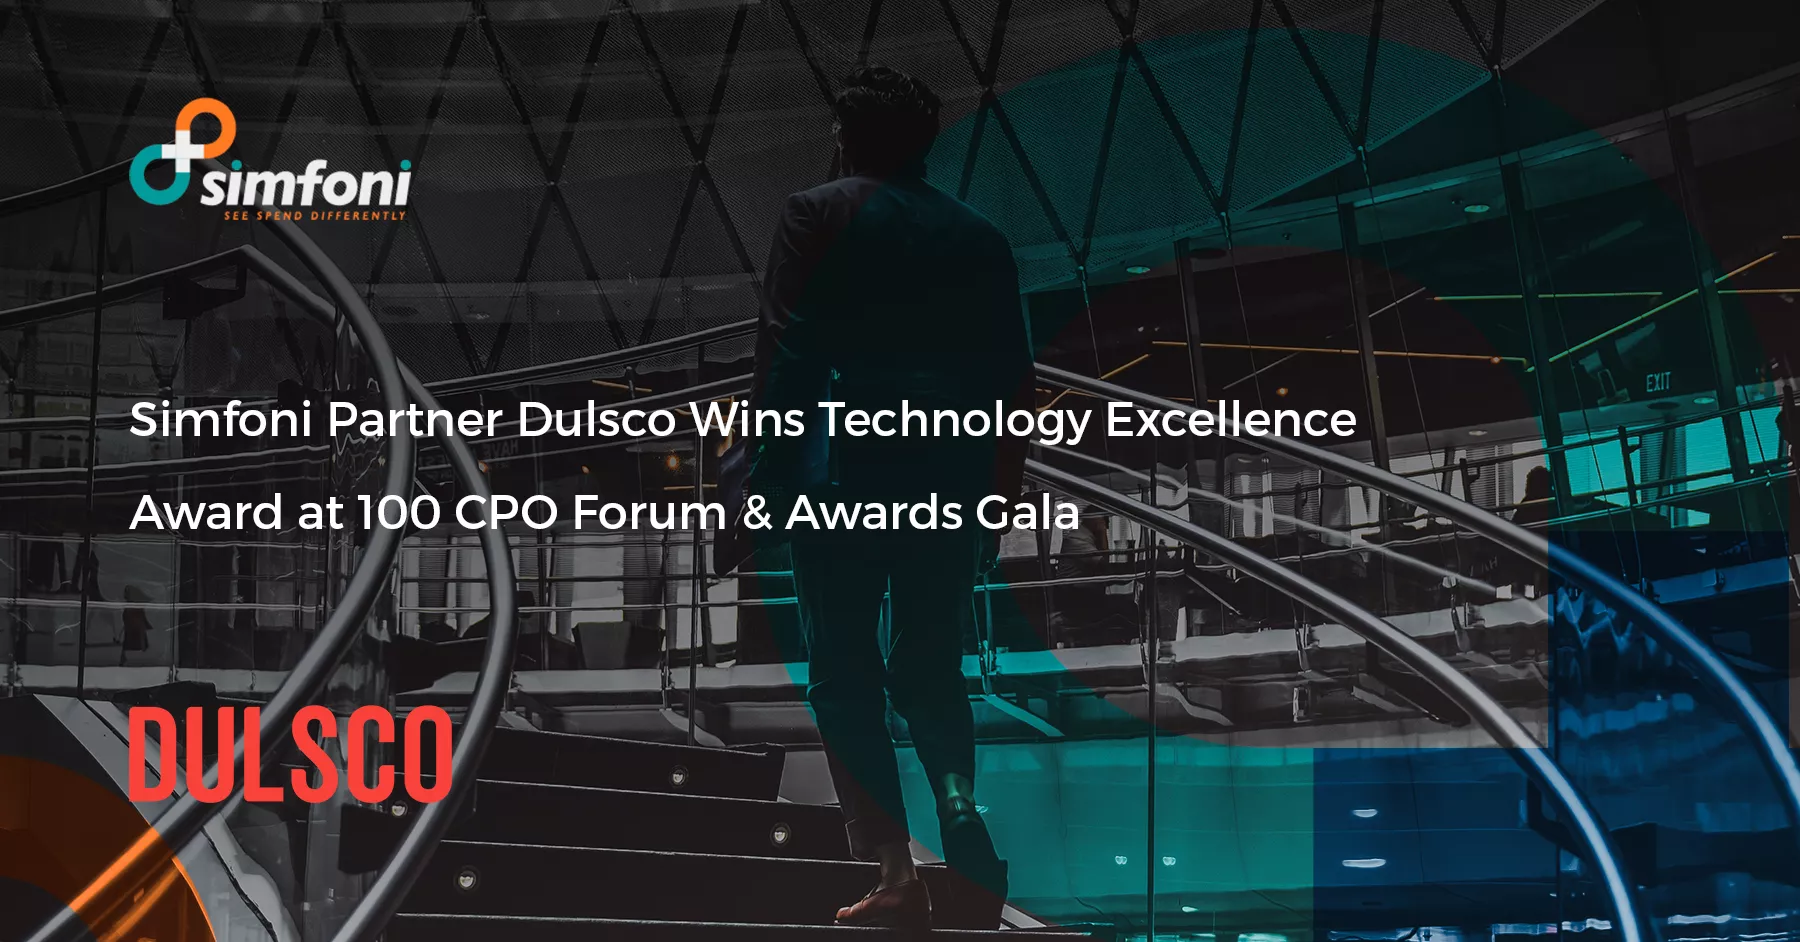 Simfoni Partner Dulsco Wins Technology Excellence Award at 100 CPO Forum & Awards Gala